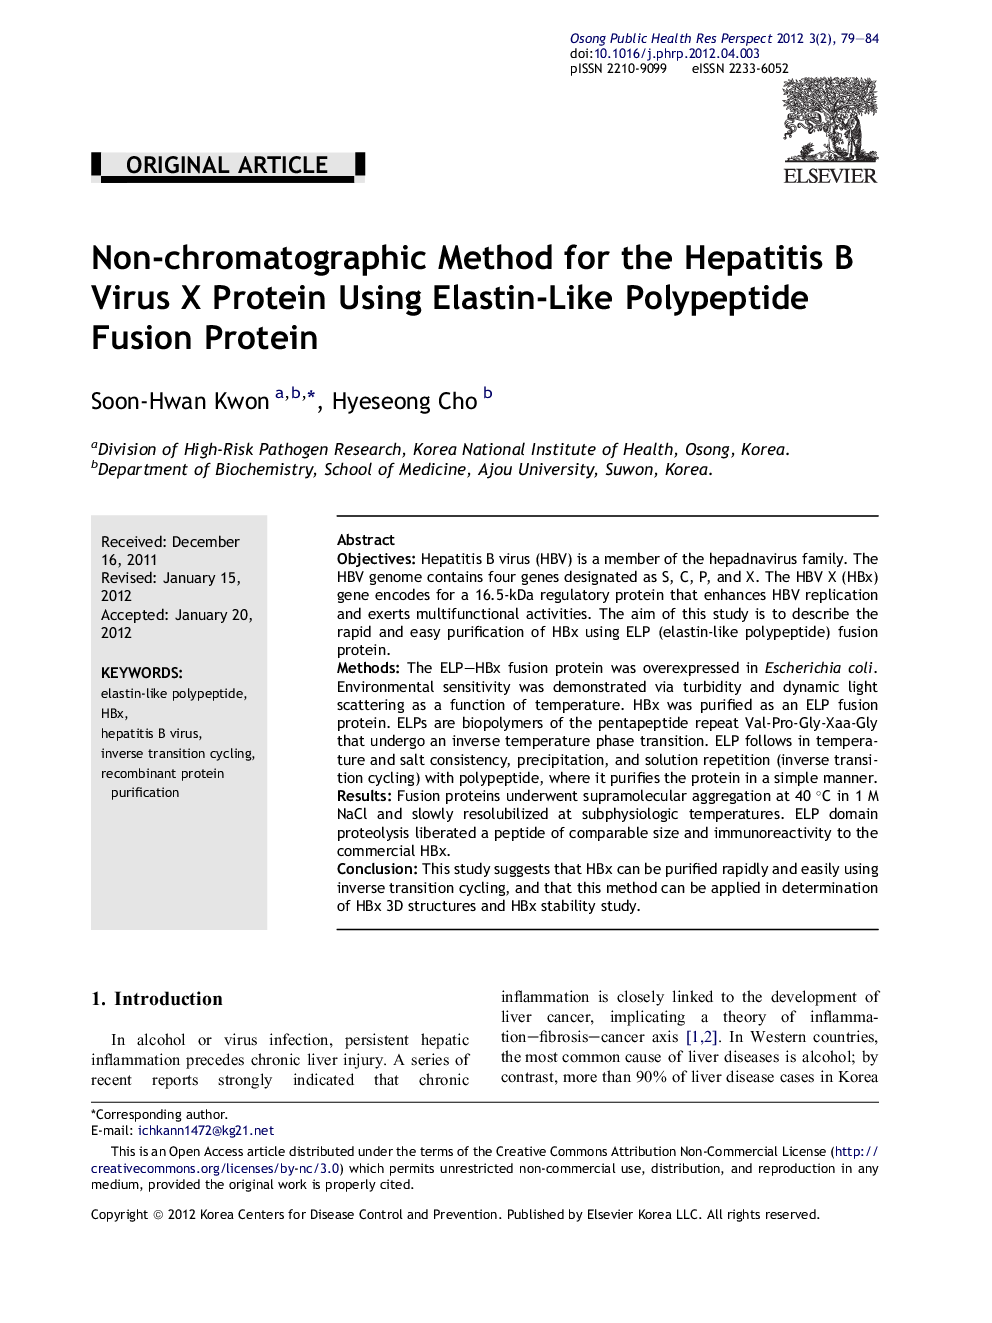 Non-chromatographic Method for the Hepatitis B Virus X Protein Using Elastin-Like Polypeptide Fusion Protein 